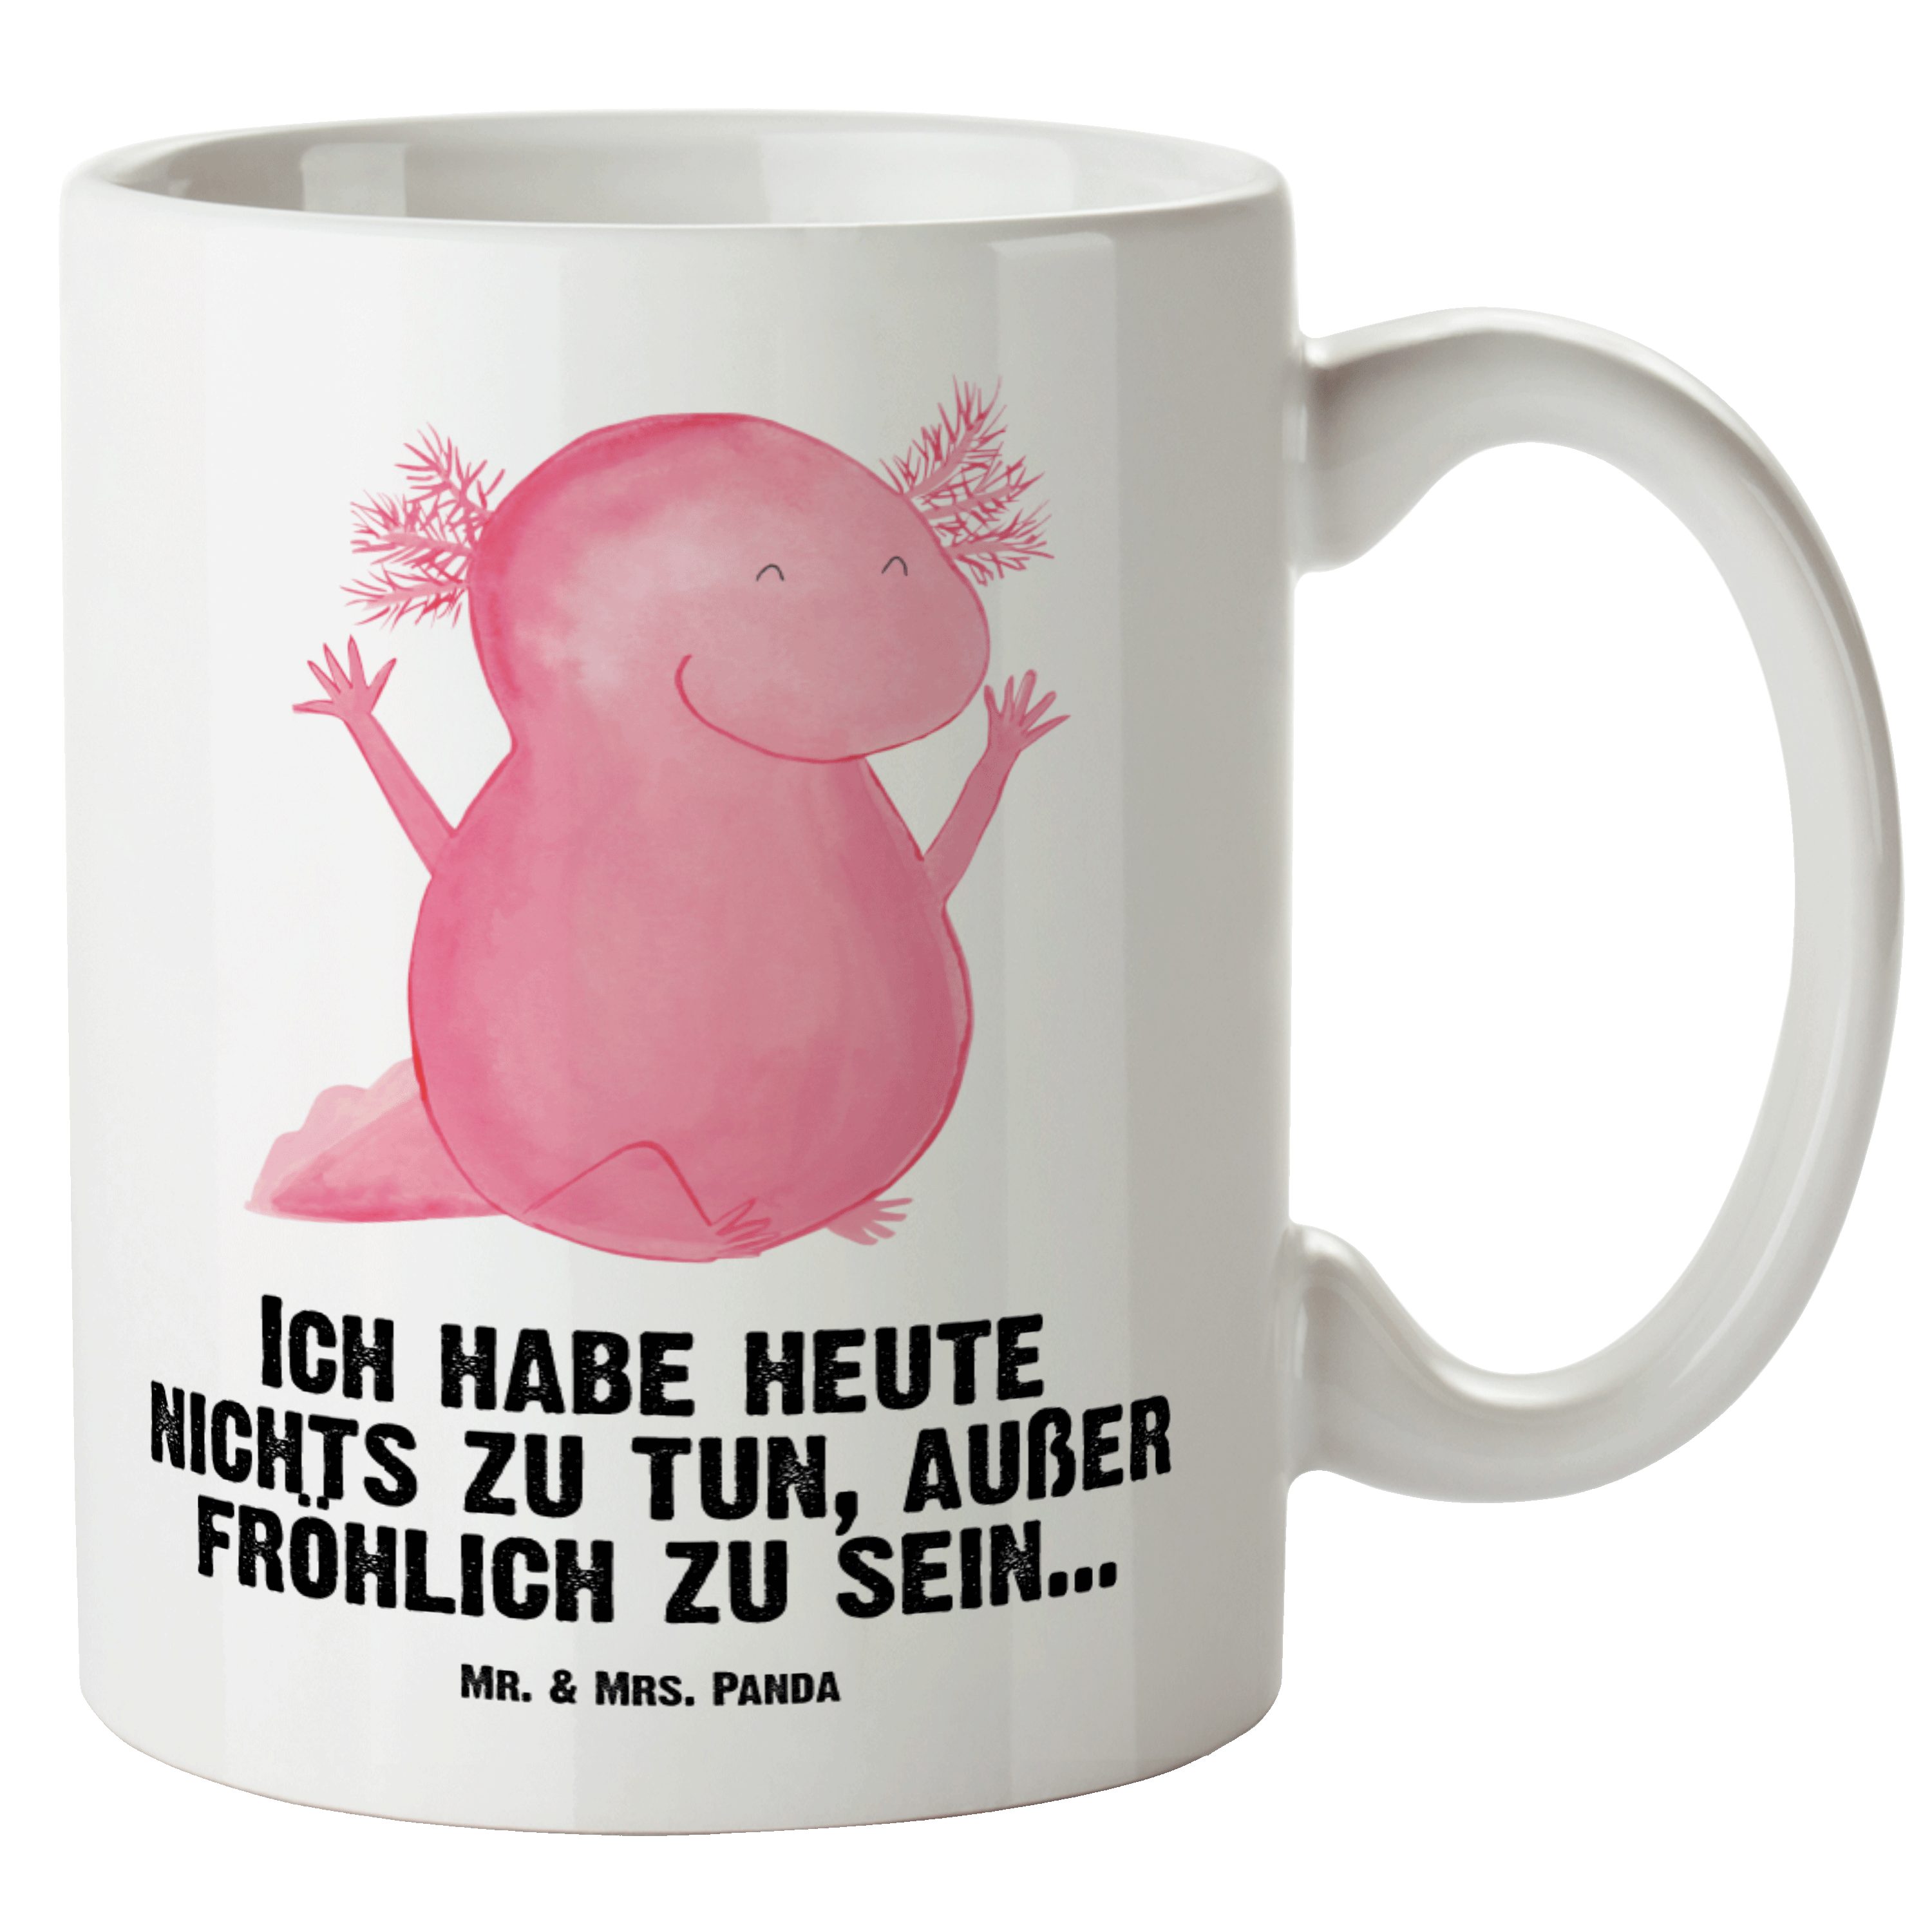 Mr. & Mrs. Panda Tasse Axolotl Hurra - Weiß - Geschenk, Spaß, spülmaschinenfest, Grosse Kaff, XL Tasse Keramik